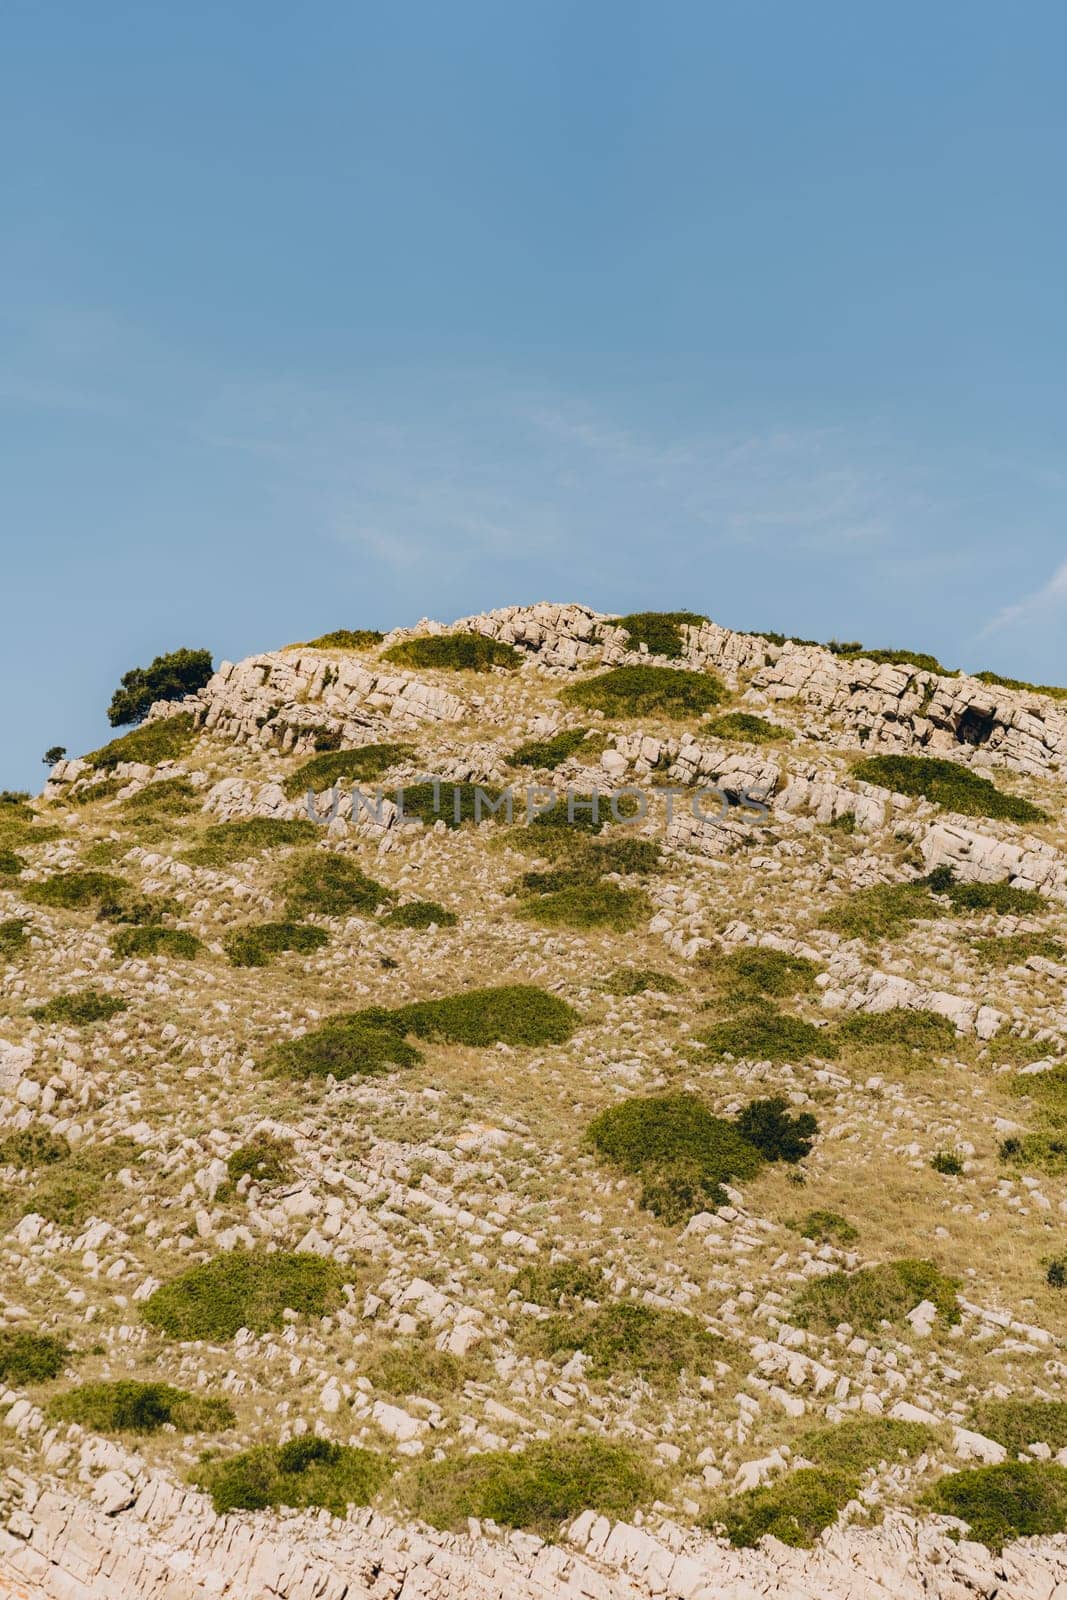 Scenic hill with stones and dry grass, landscape of Dugi Otok island, Croatia by Popov